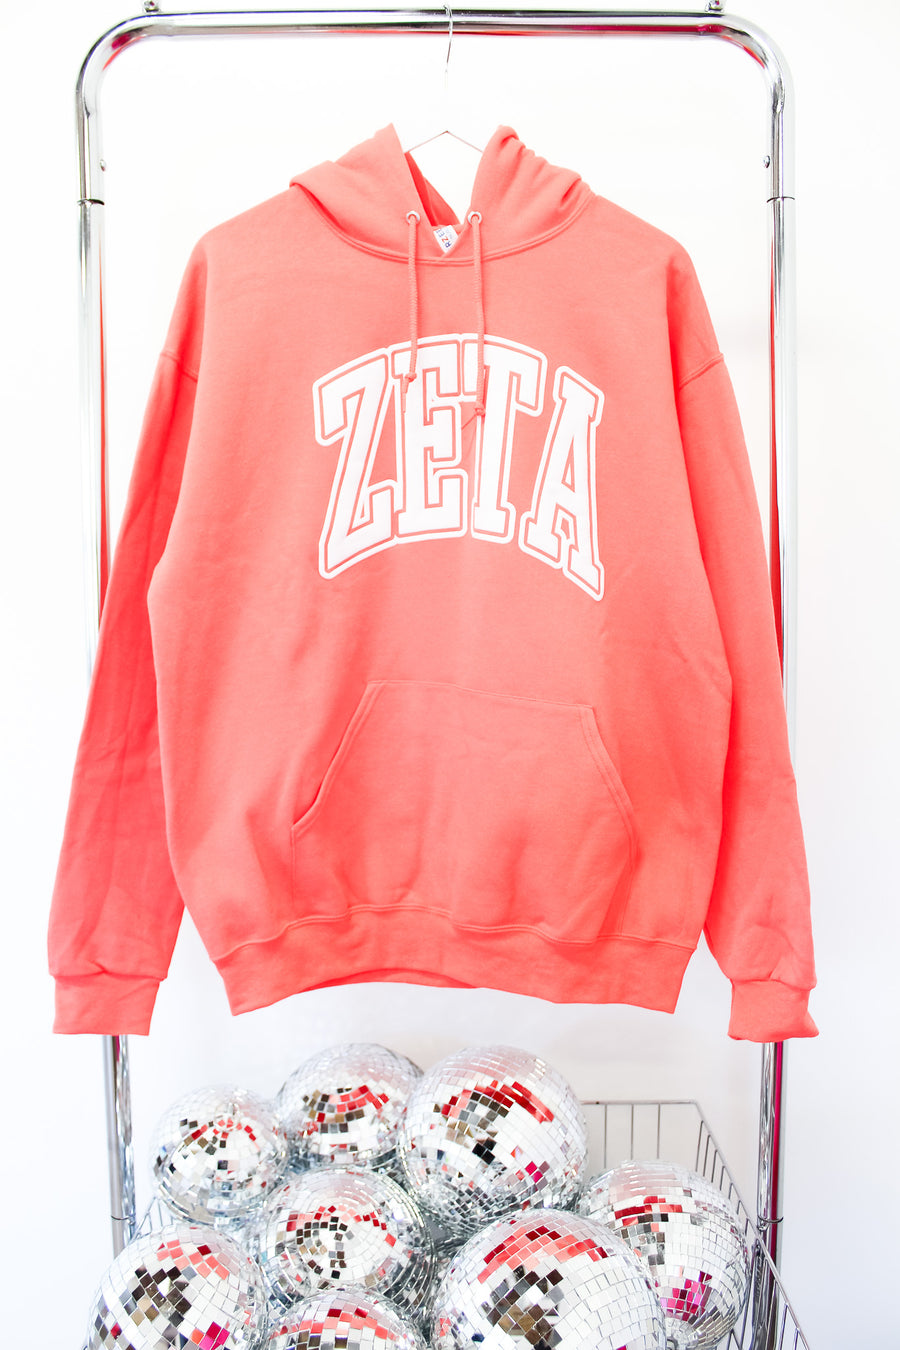 Zeta Tau Alpha Greek Sweatshirt - LG CORAL